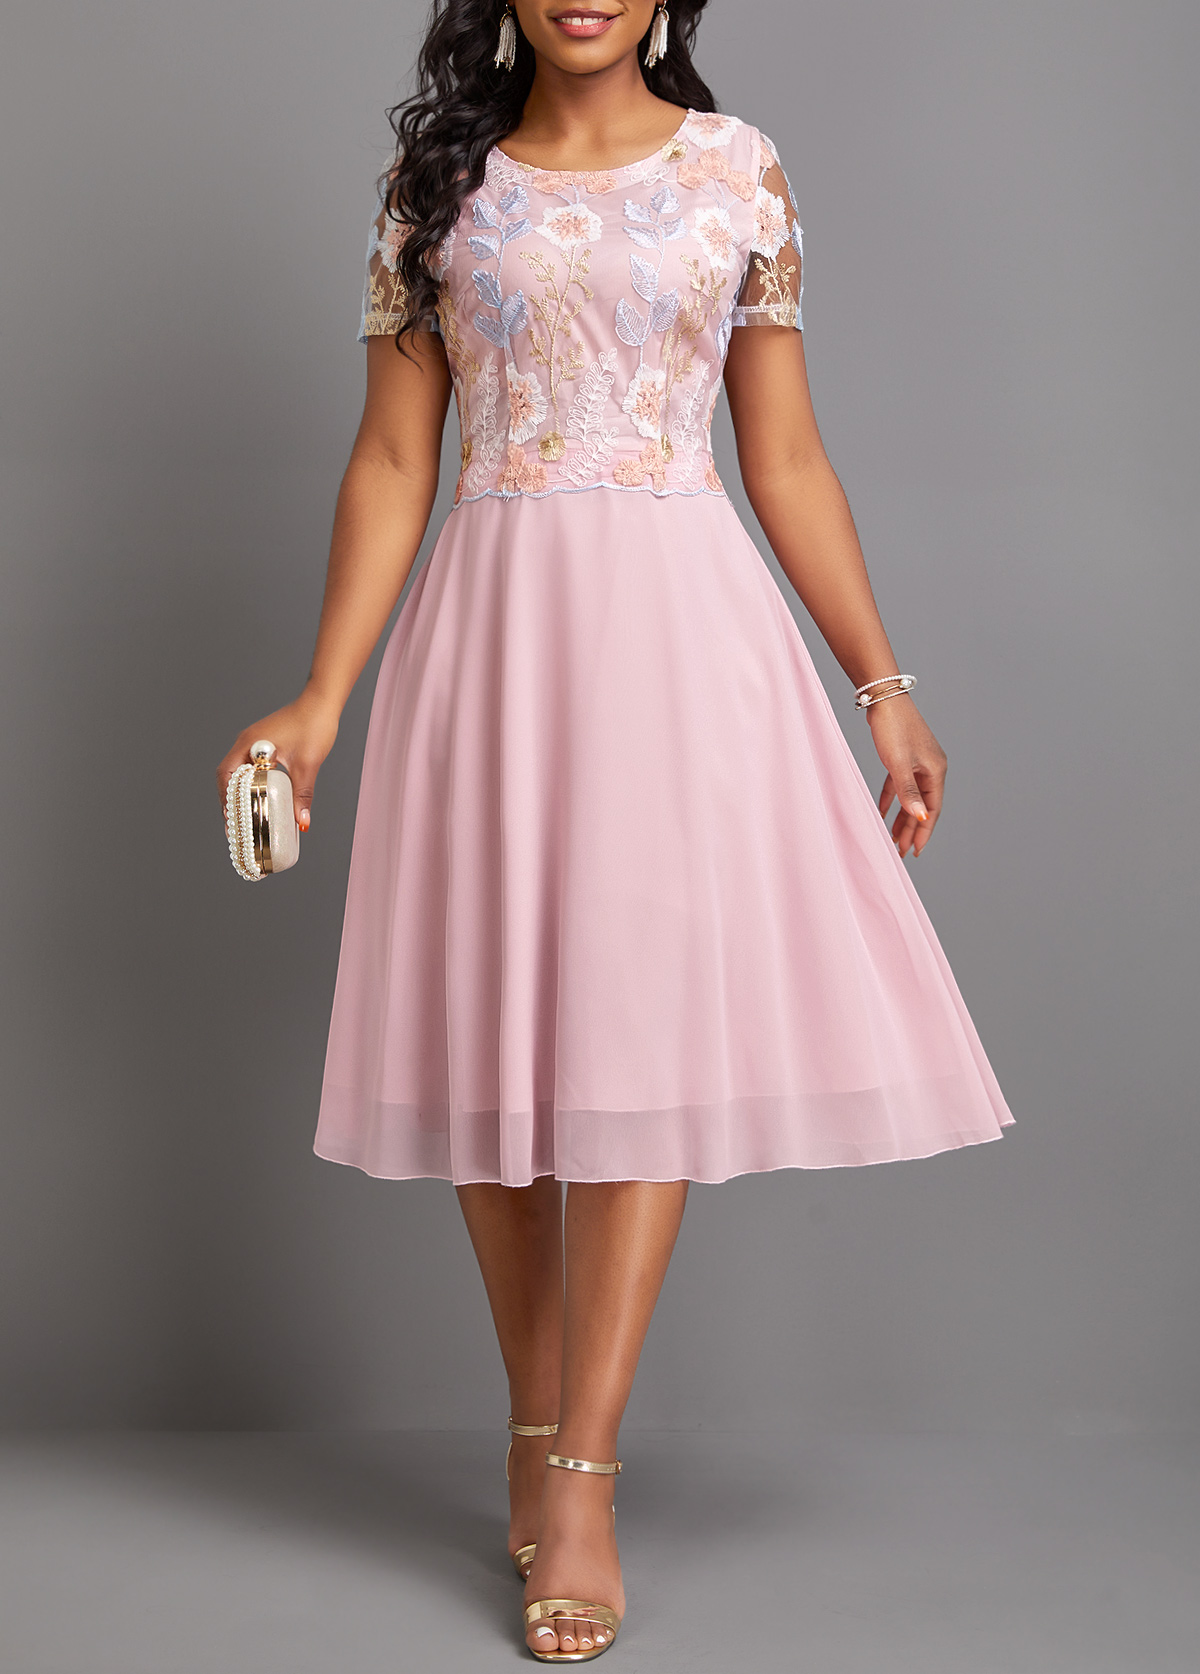 ROTITA Embroidery Light Pink Round Neck Short Sleeve Dress